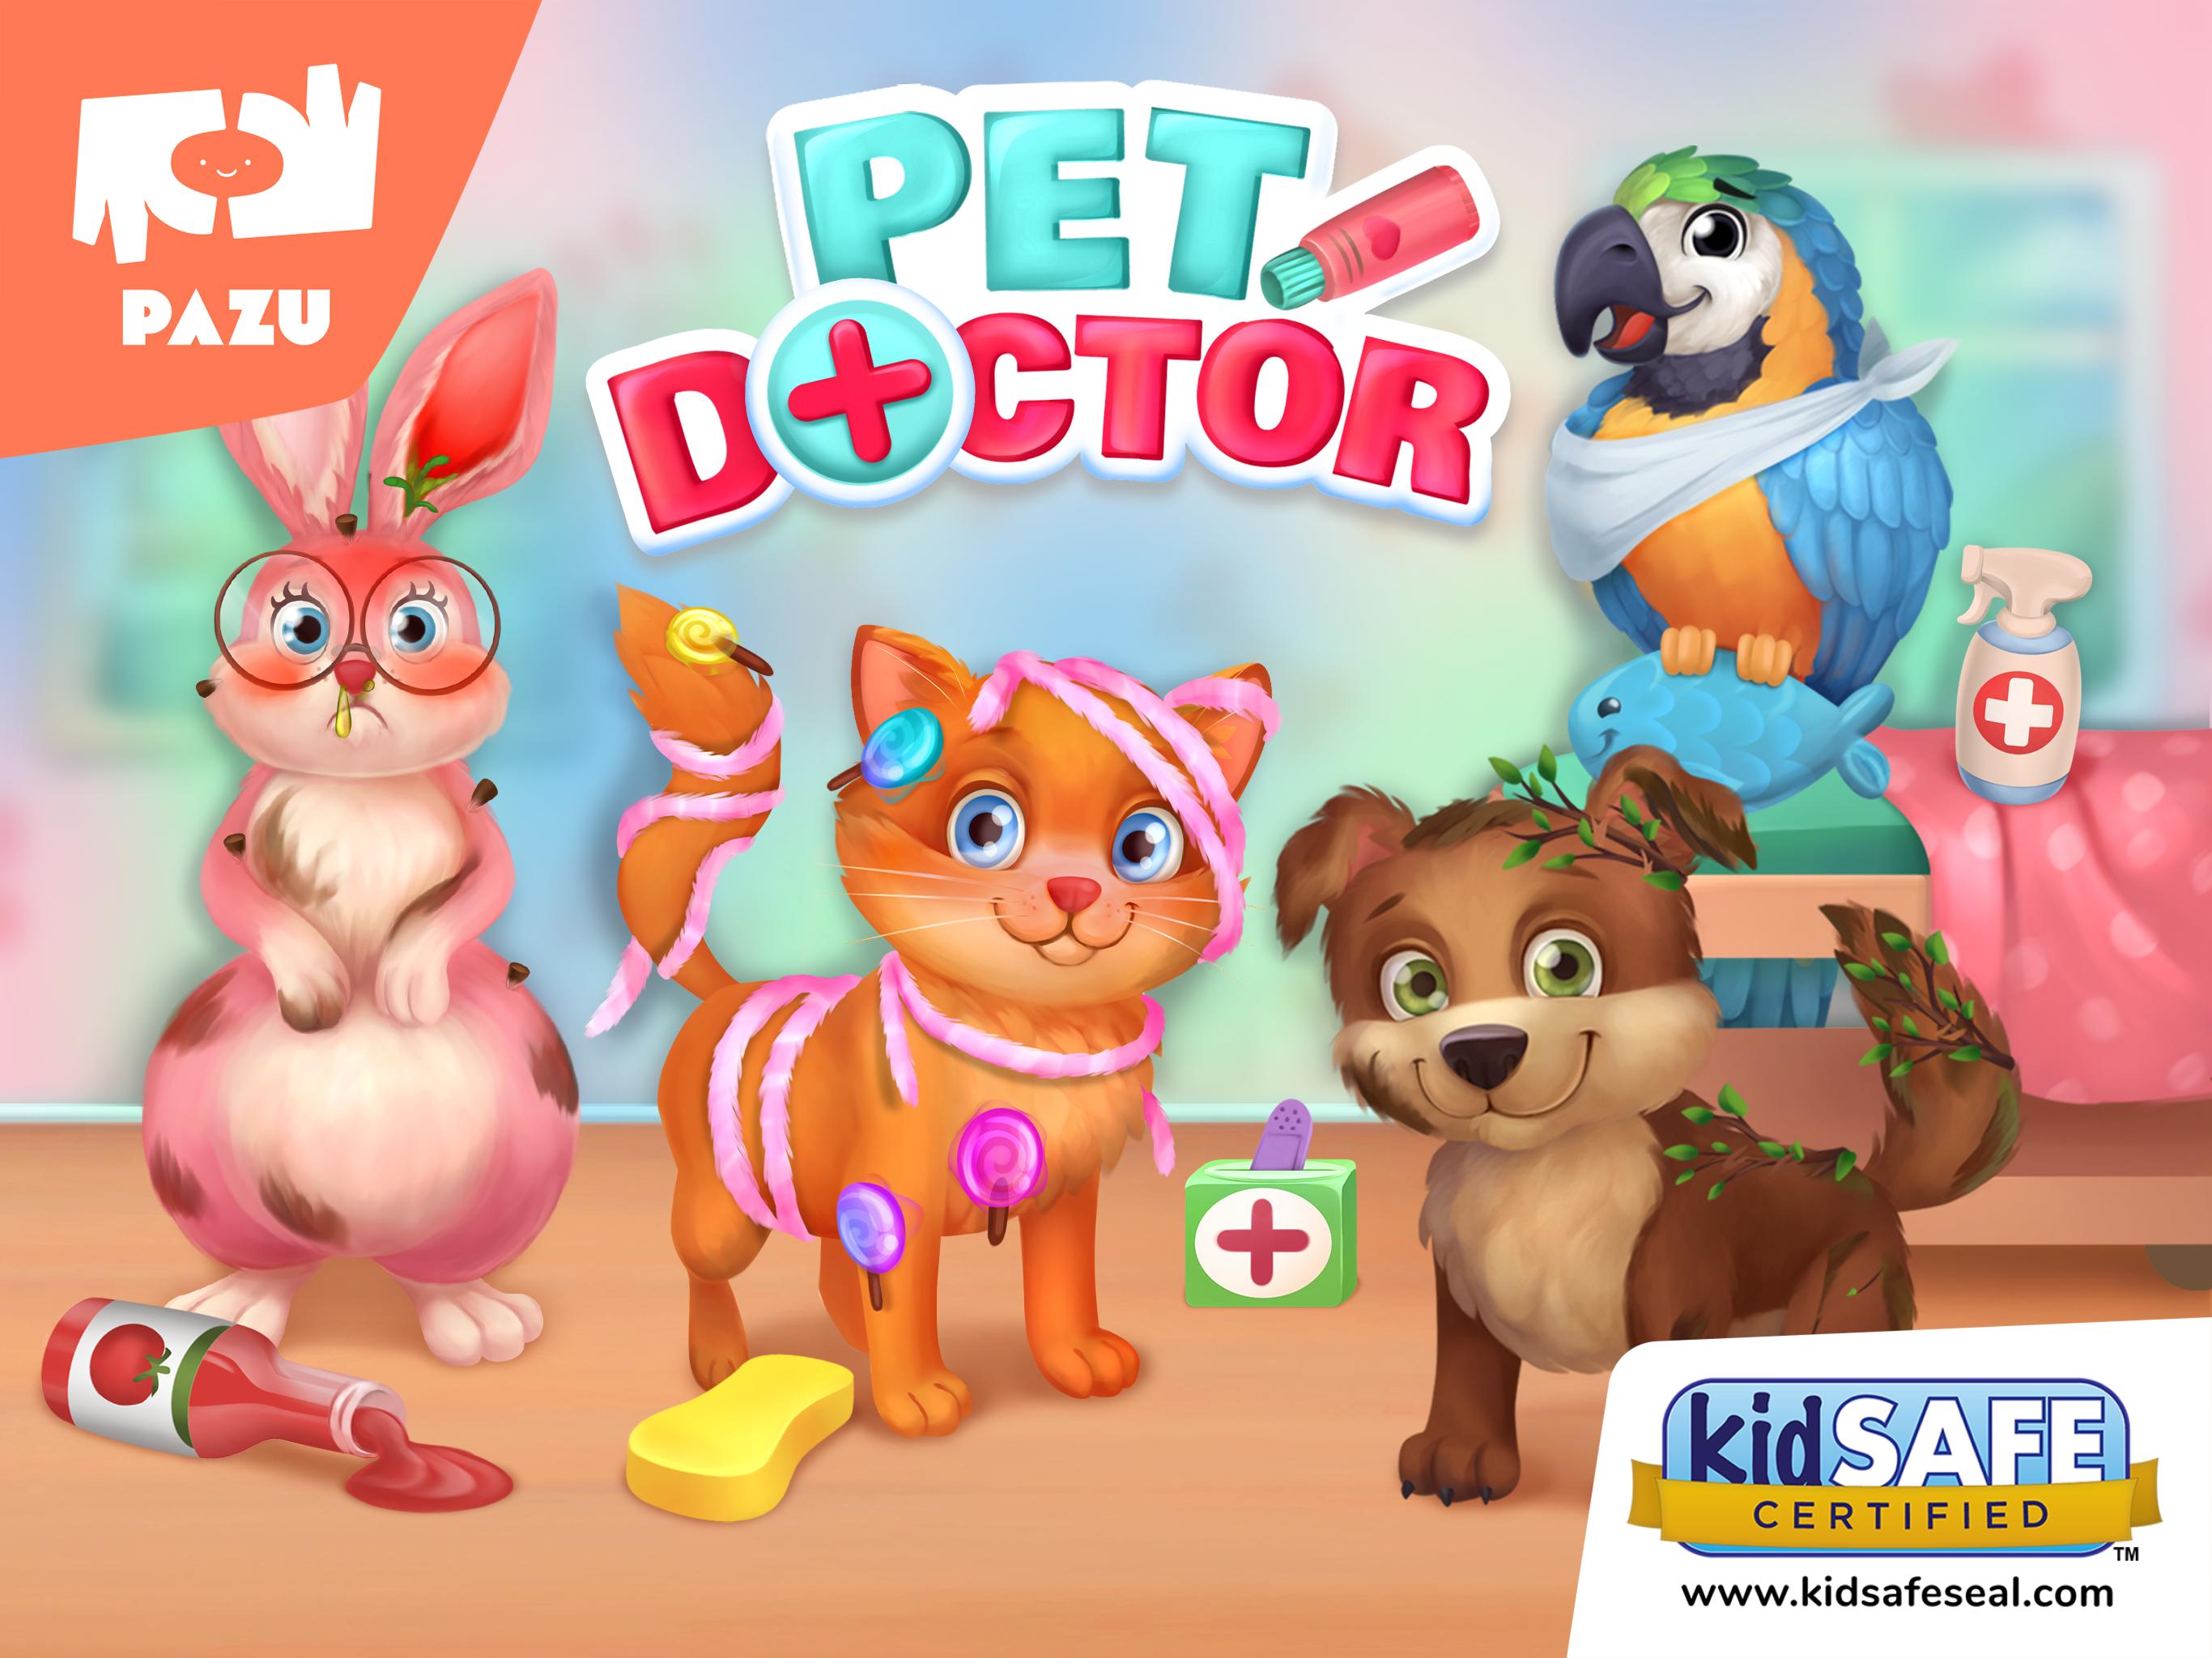 Доктор петс. Игра ветеринар. Игра в ветеринара для детей. Pet Doctor. Игра ветеринар для детей 5 лет на диске.